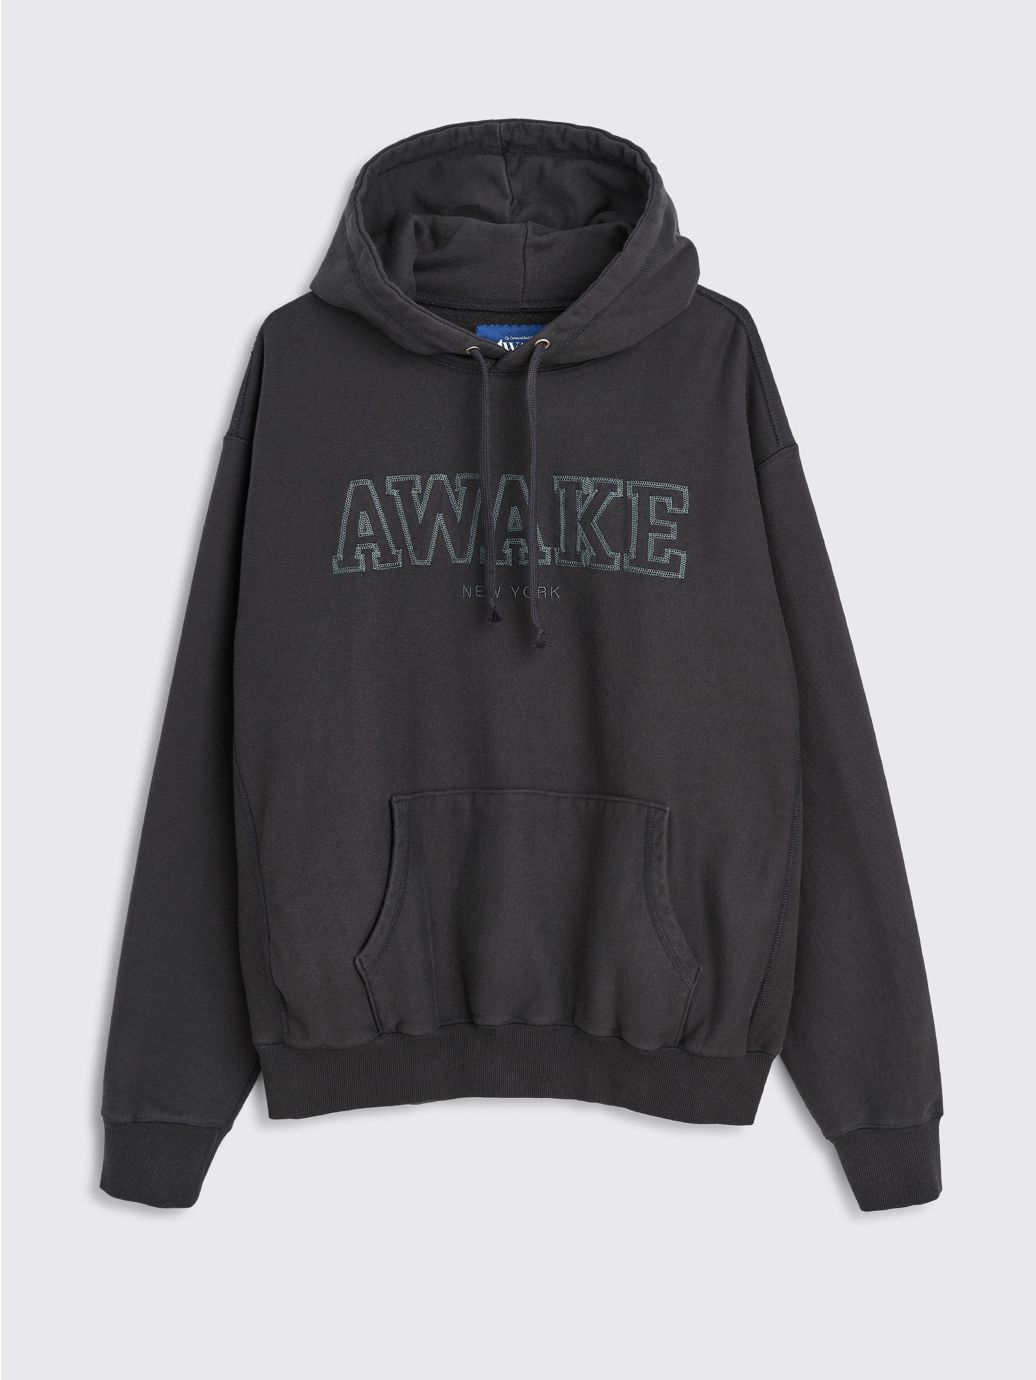 tres-bien.com | Awake NY Block Logo Hooded Sweatshirt Charcoal